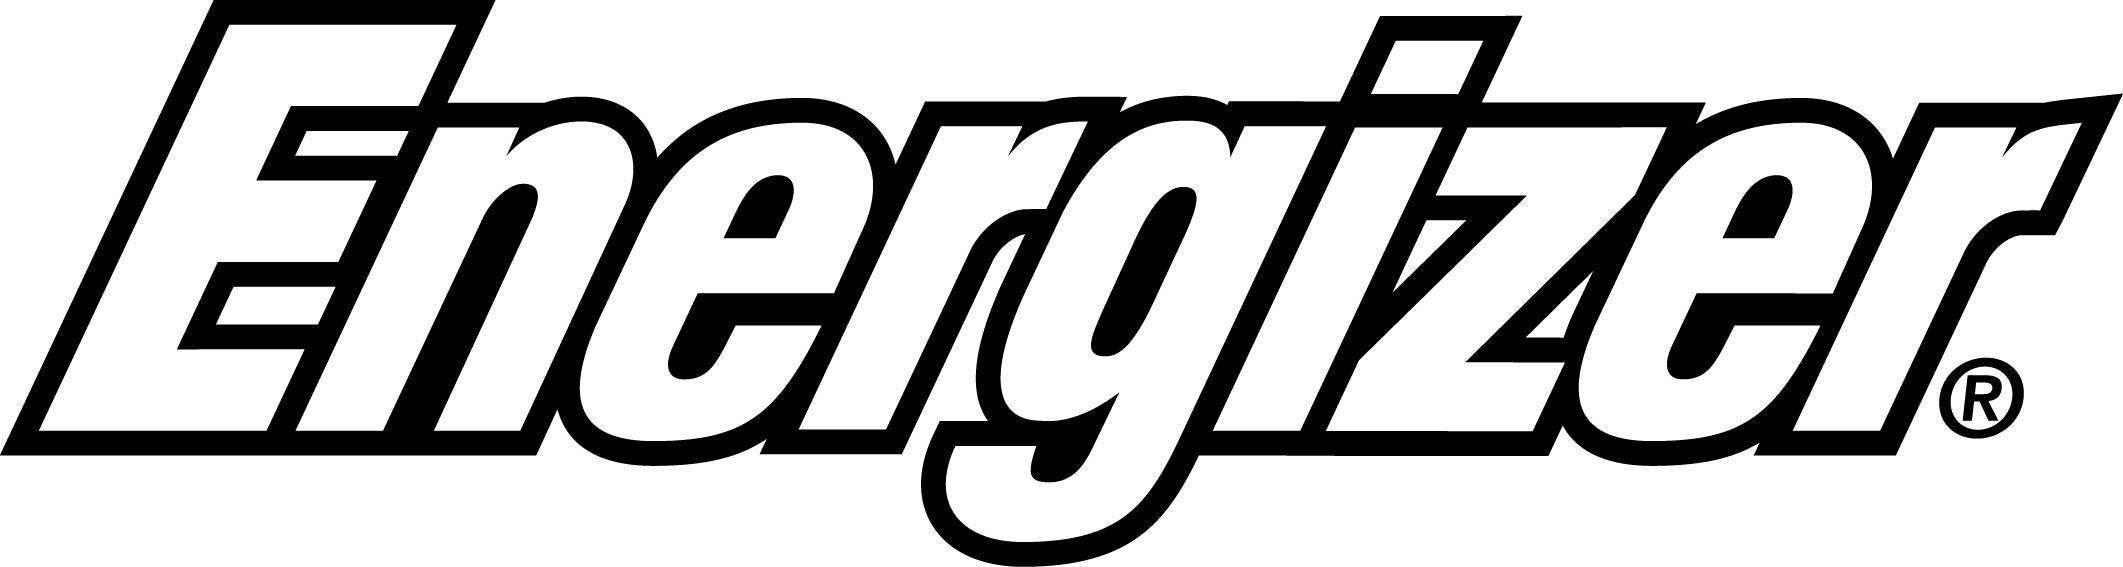 Energizer PNG - 39651